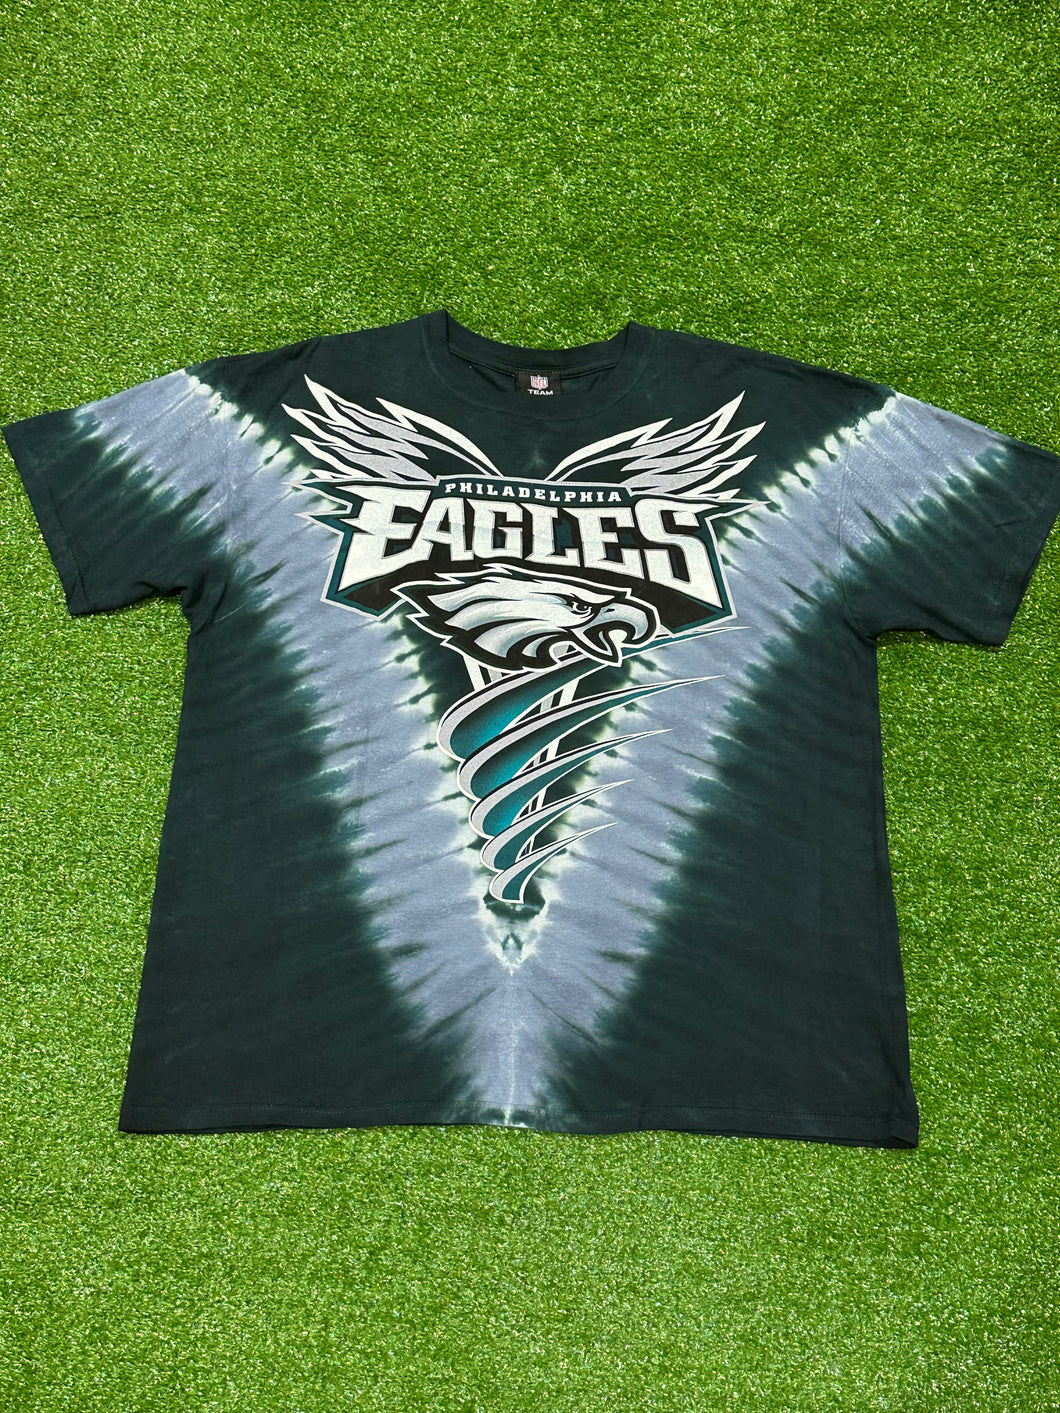 2009 Philadelphia Eagles 